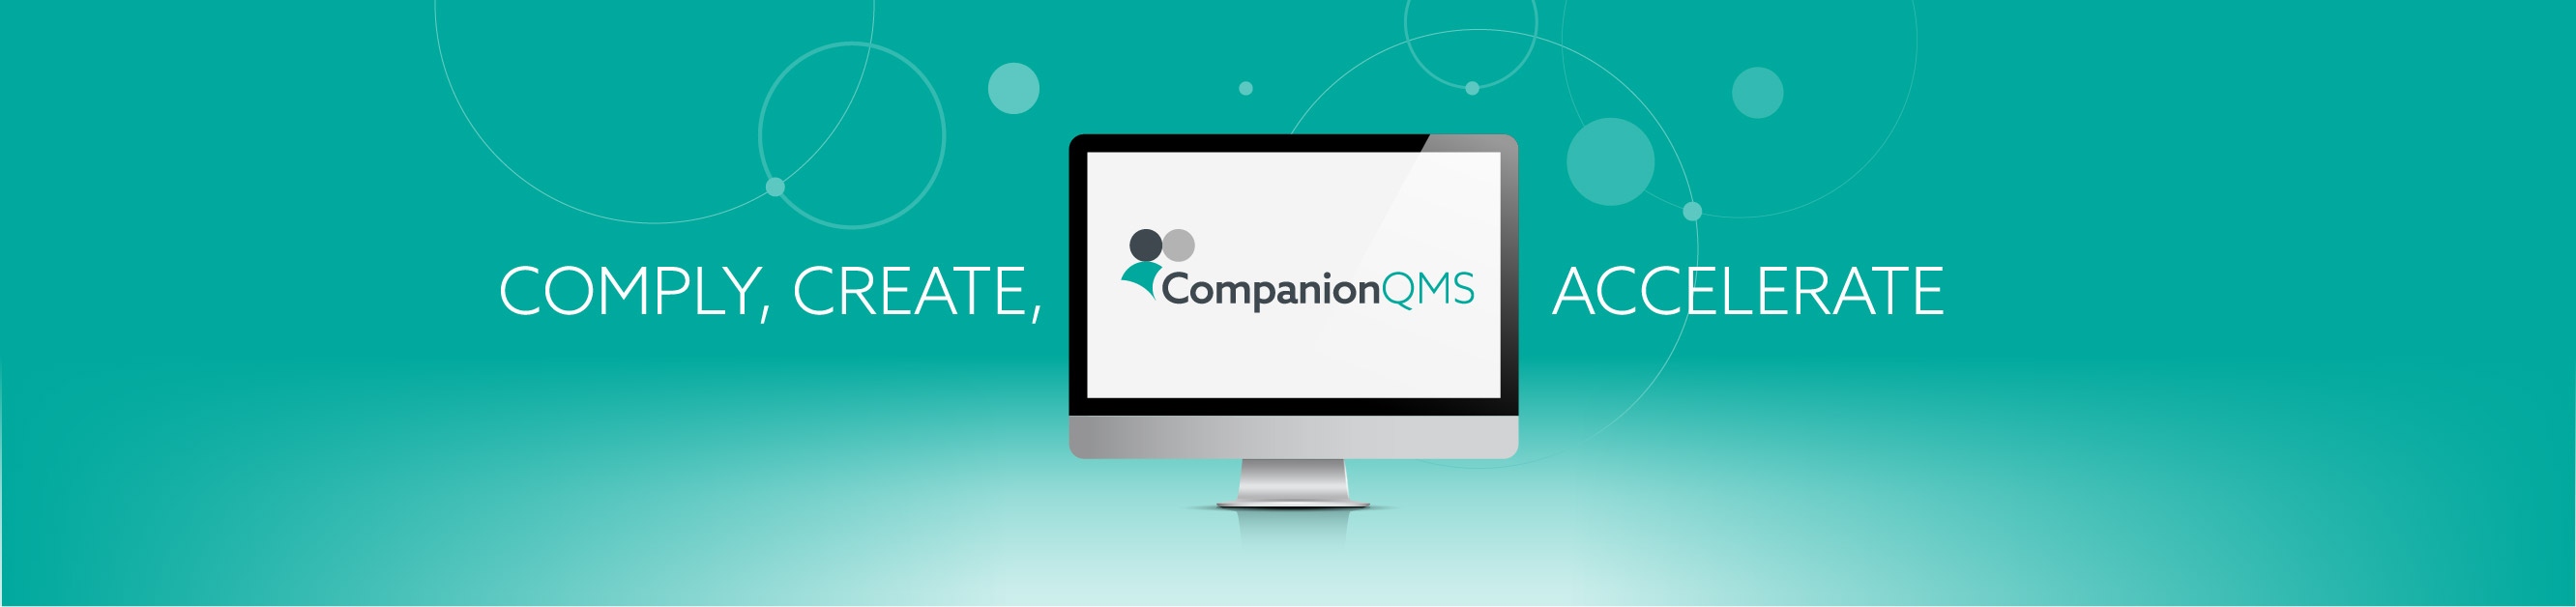 CompanionQMS Comply, Create, Accelerate